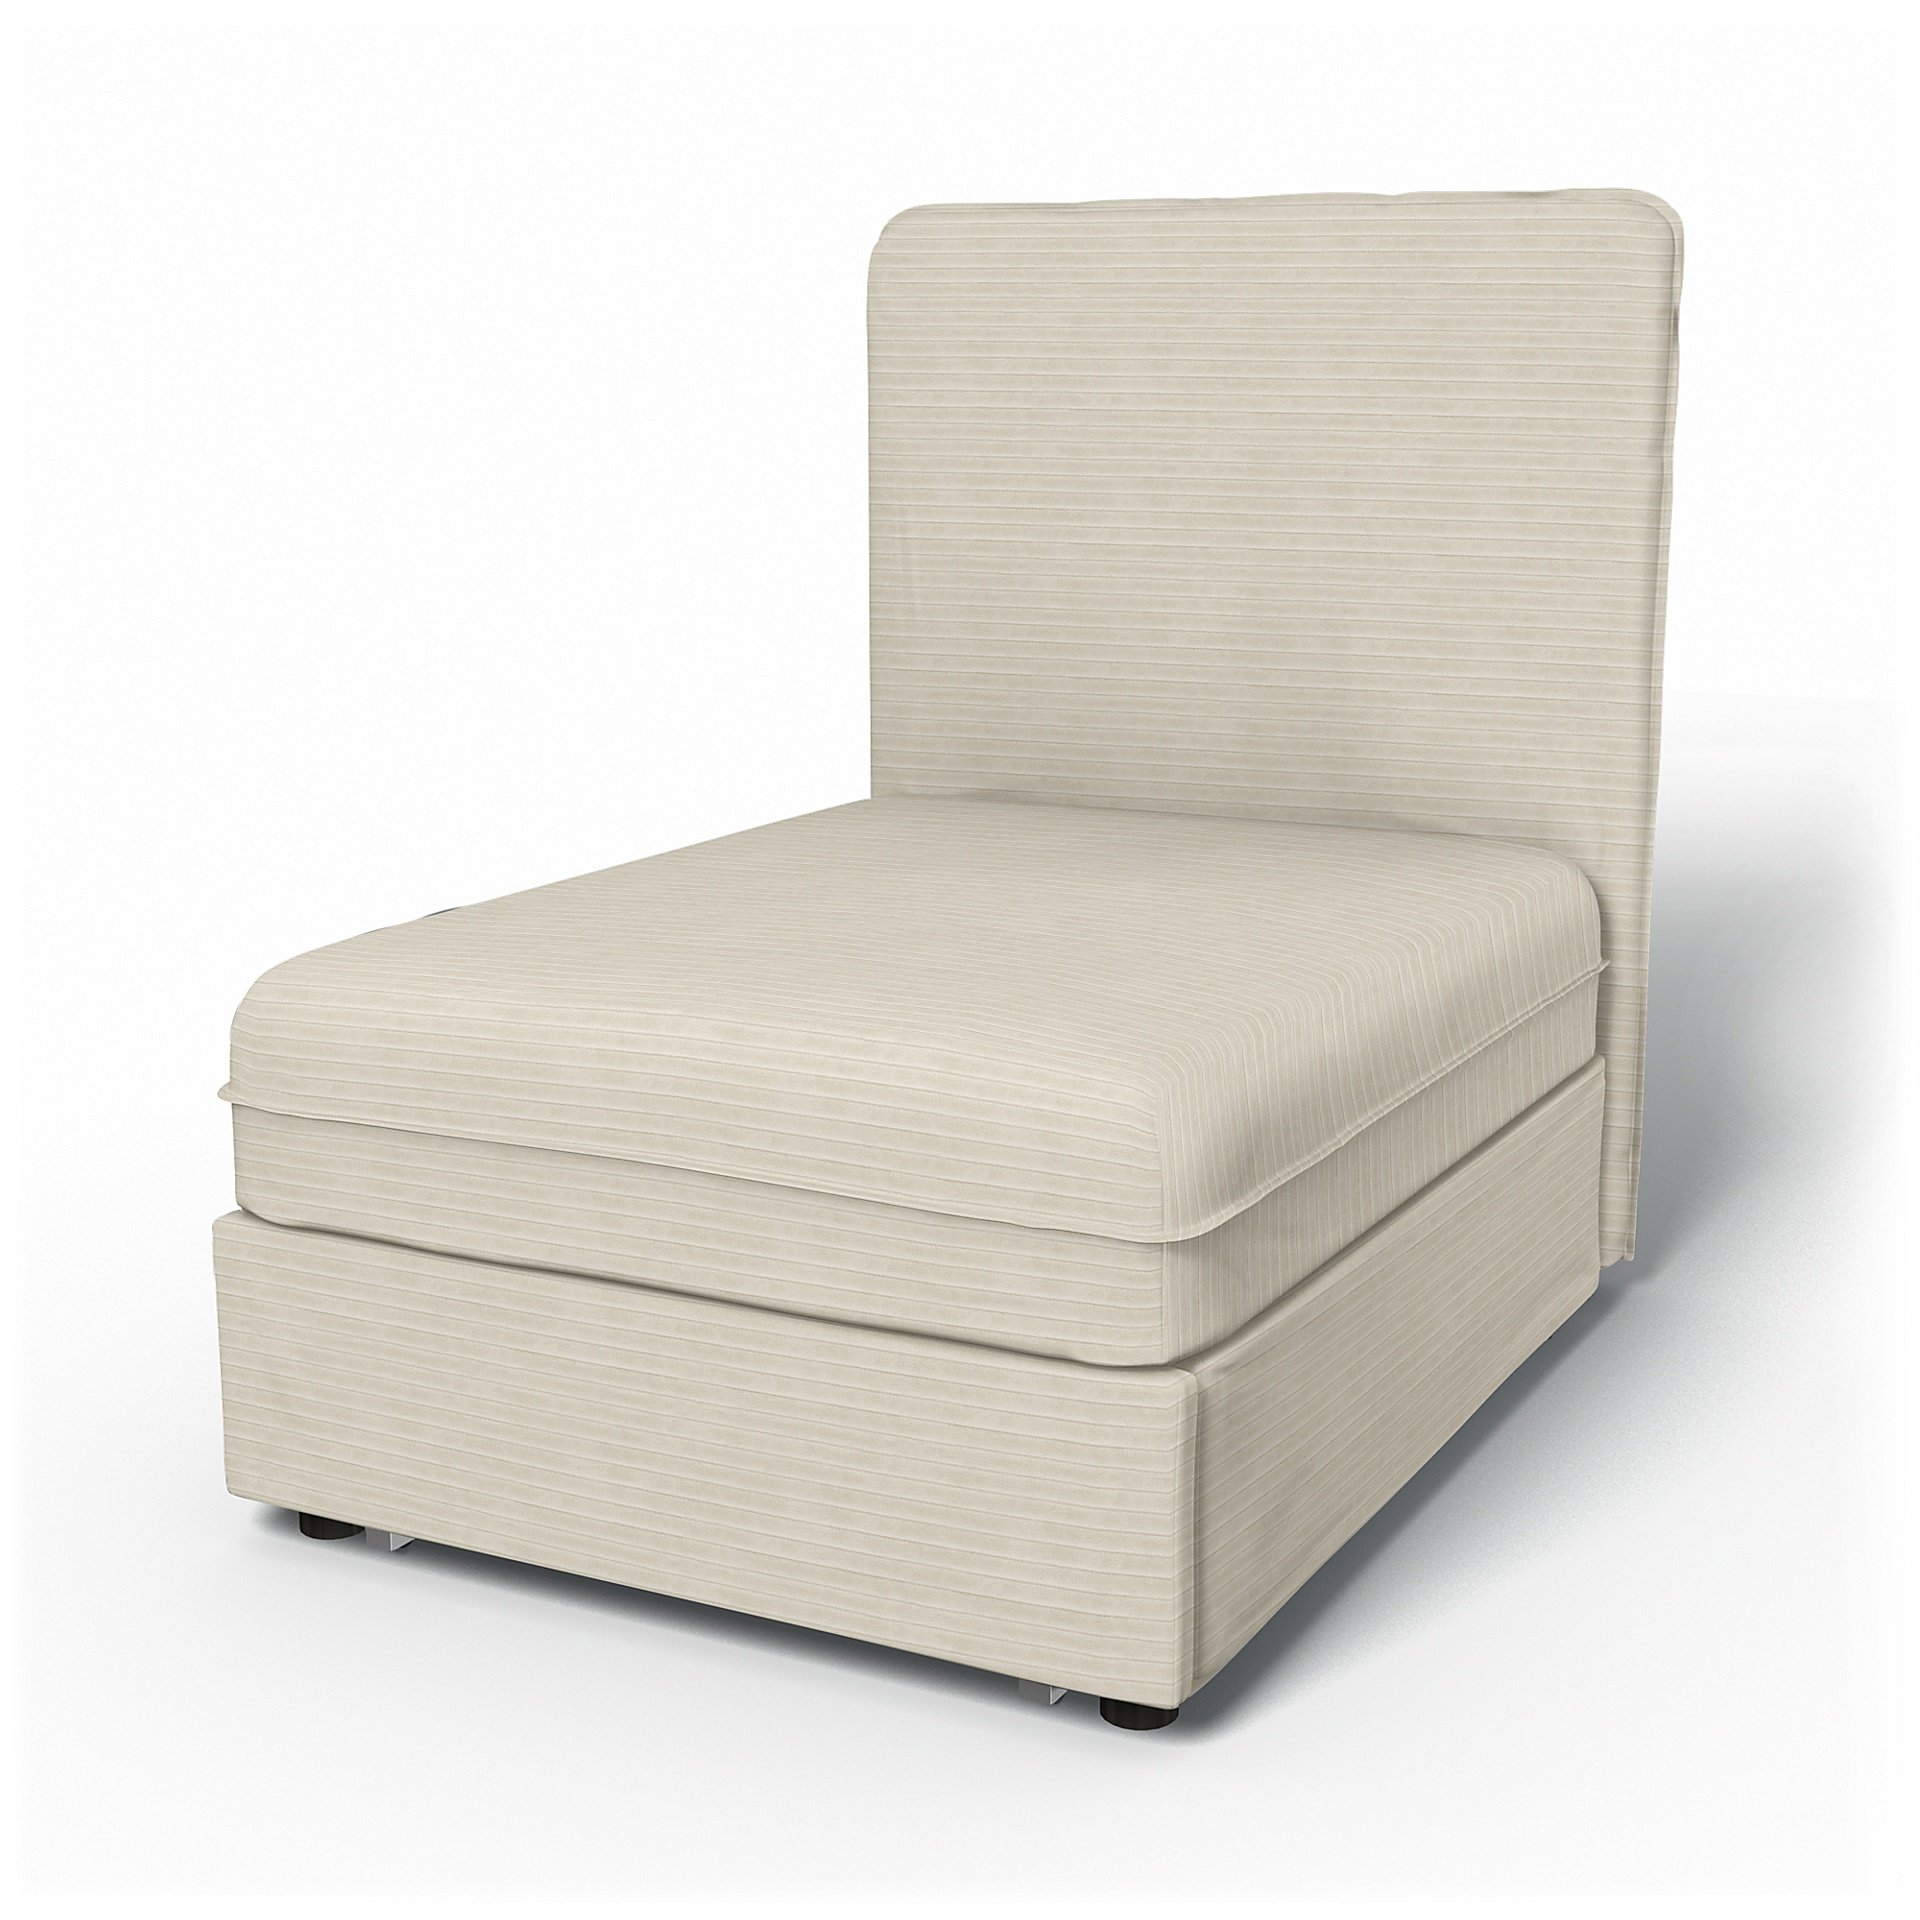 IKEA - Vallentuna Seat Module with High Back Sofa Bed Cover (80x100x46cm), Tofu, Corduroy - Bemz